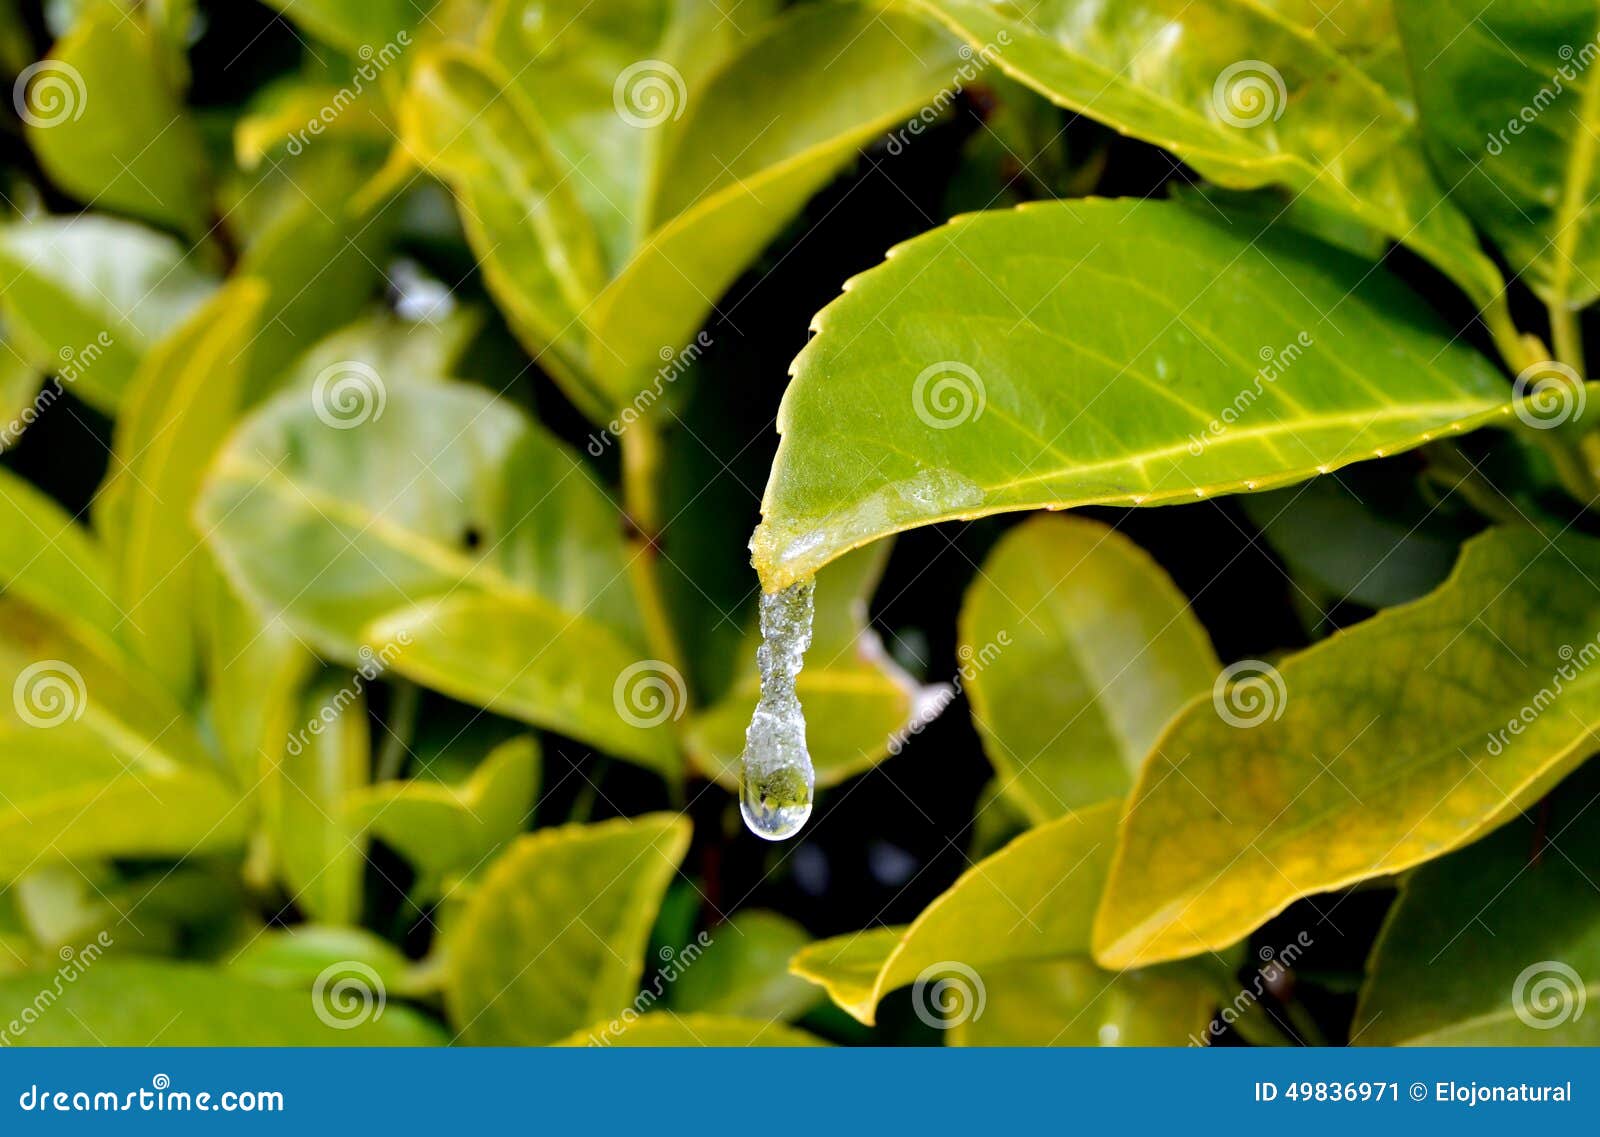 leaf and freeze drop